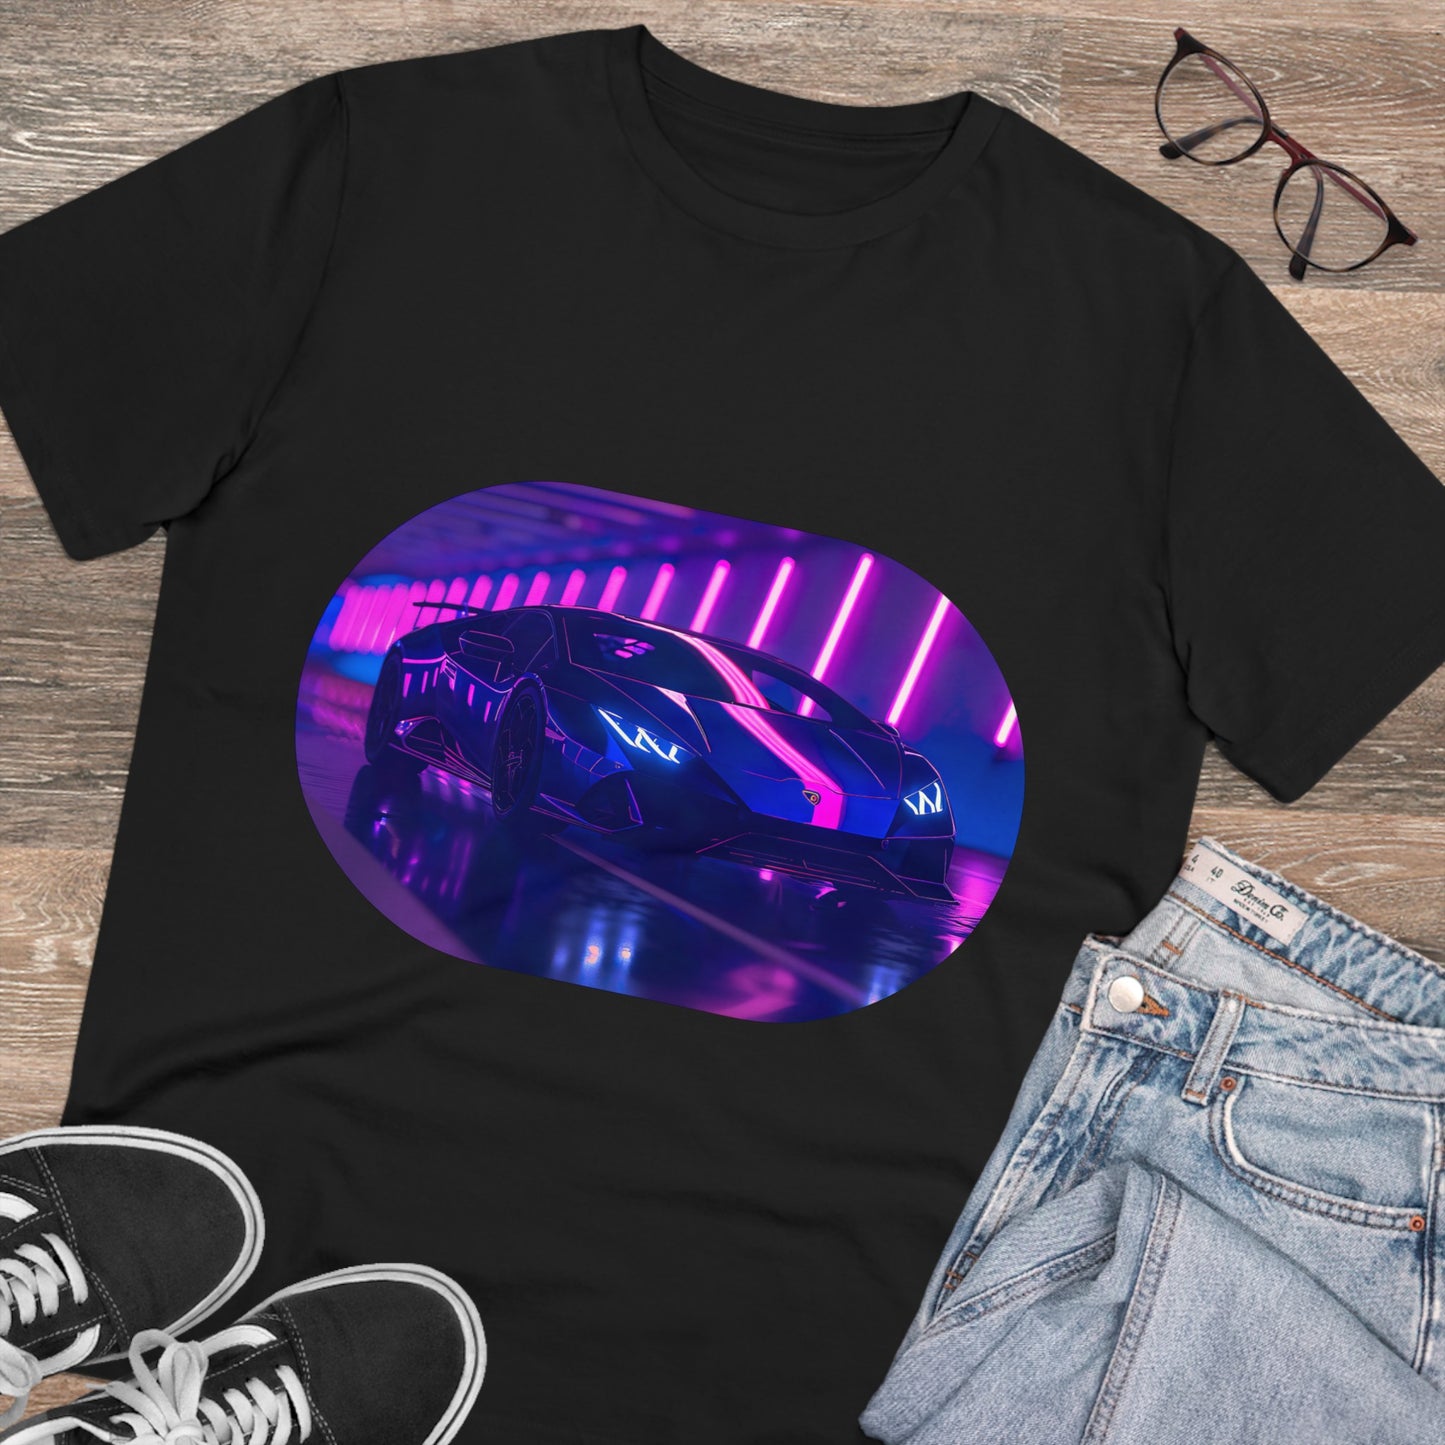 A Neon Spectacle OVL Organic Creator T-shirt - Unisex